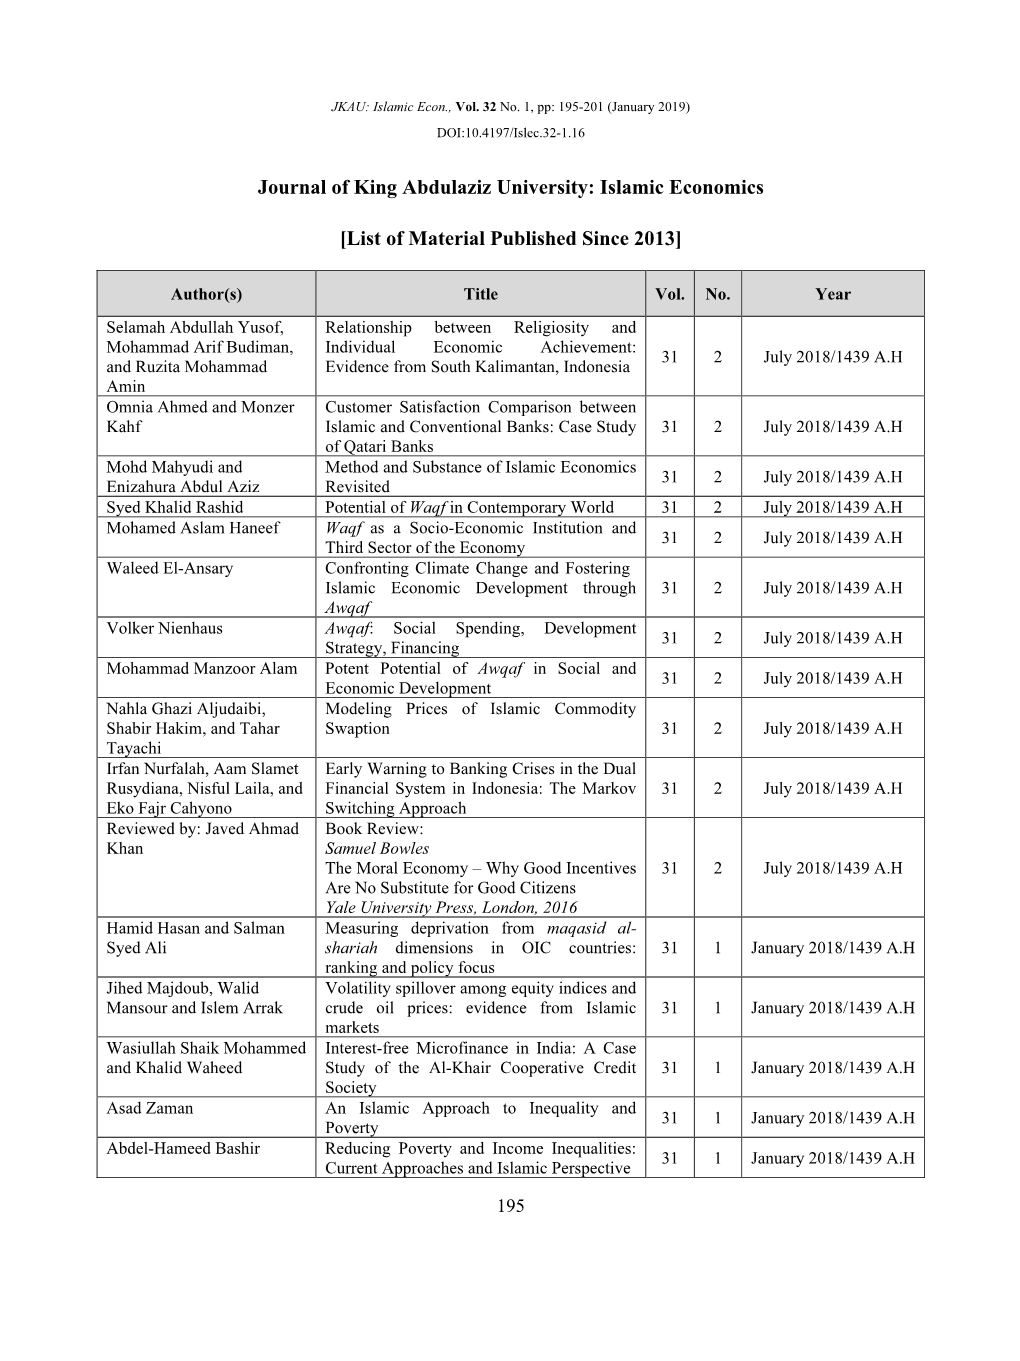 Journal of King Abdulaziz University: Islamic Economics [List of Material